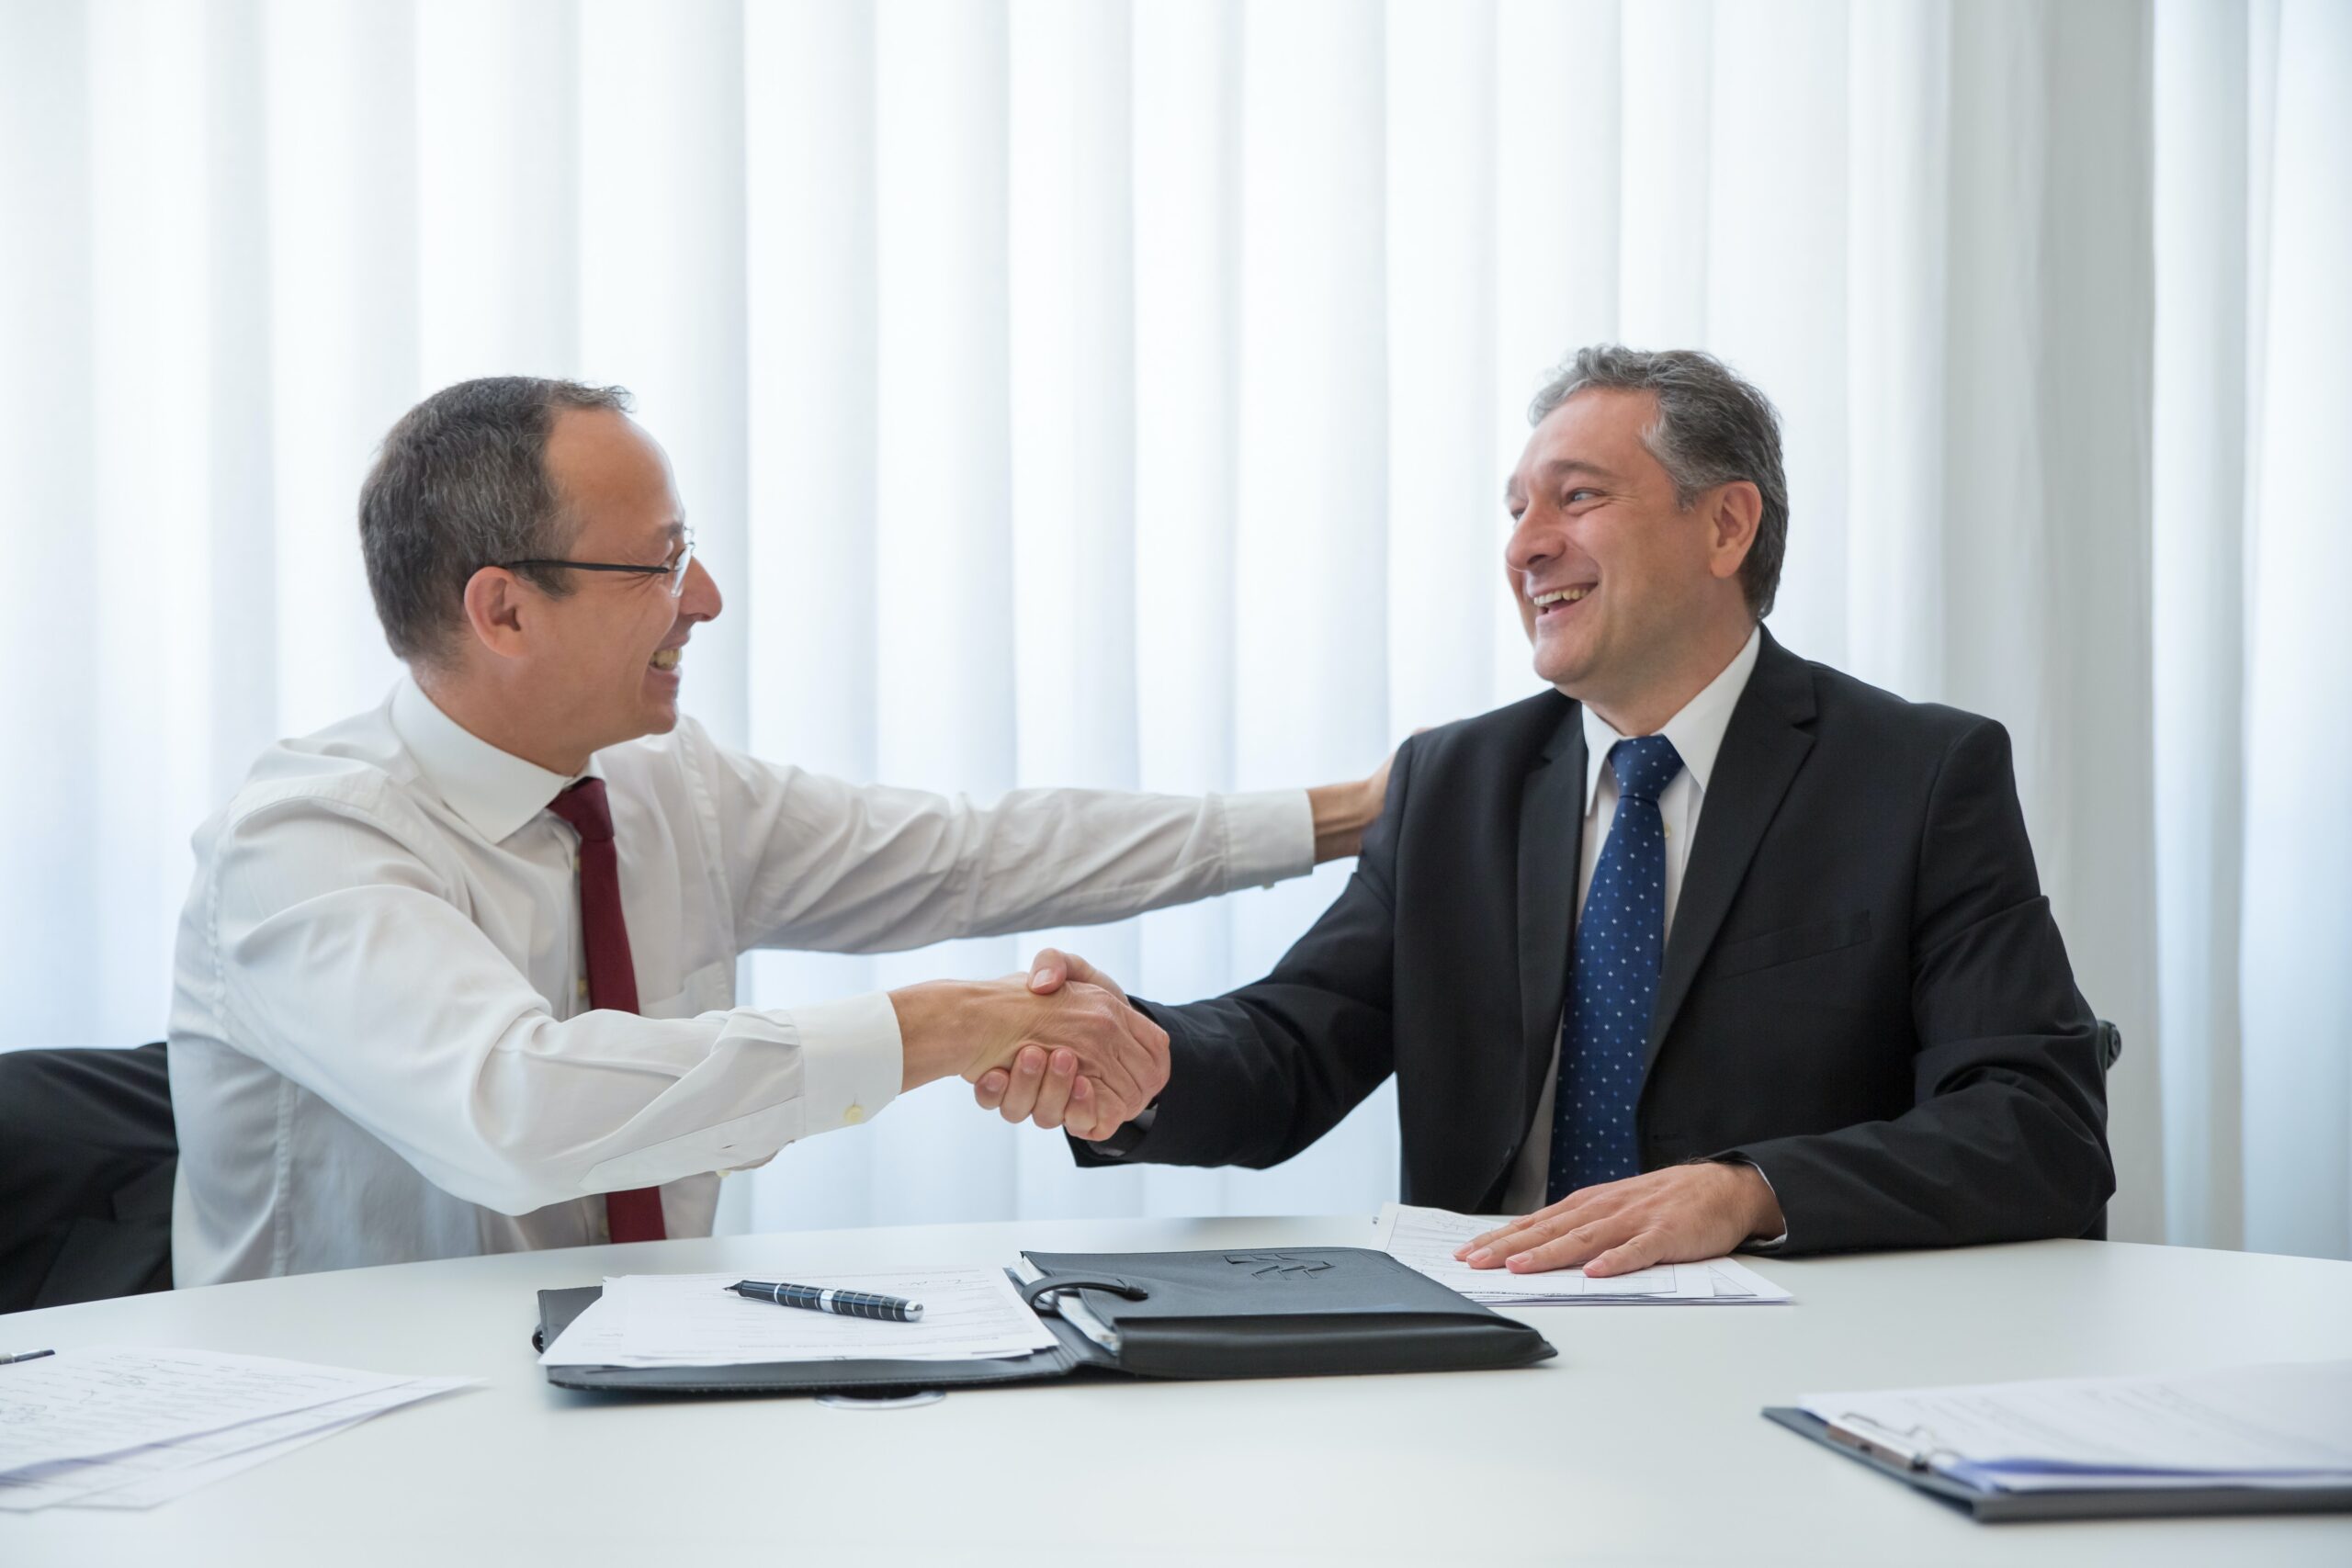 Kyvos Announces Its Strategic OEM Partnership with Merative